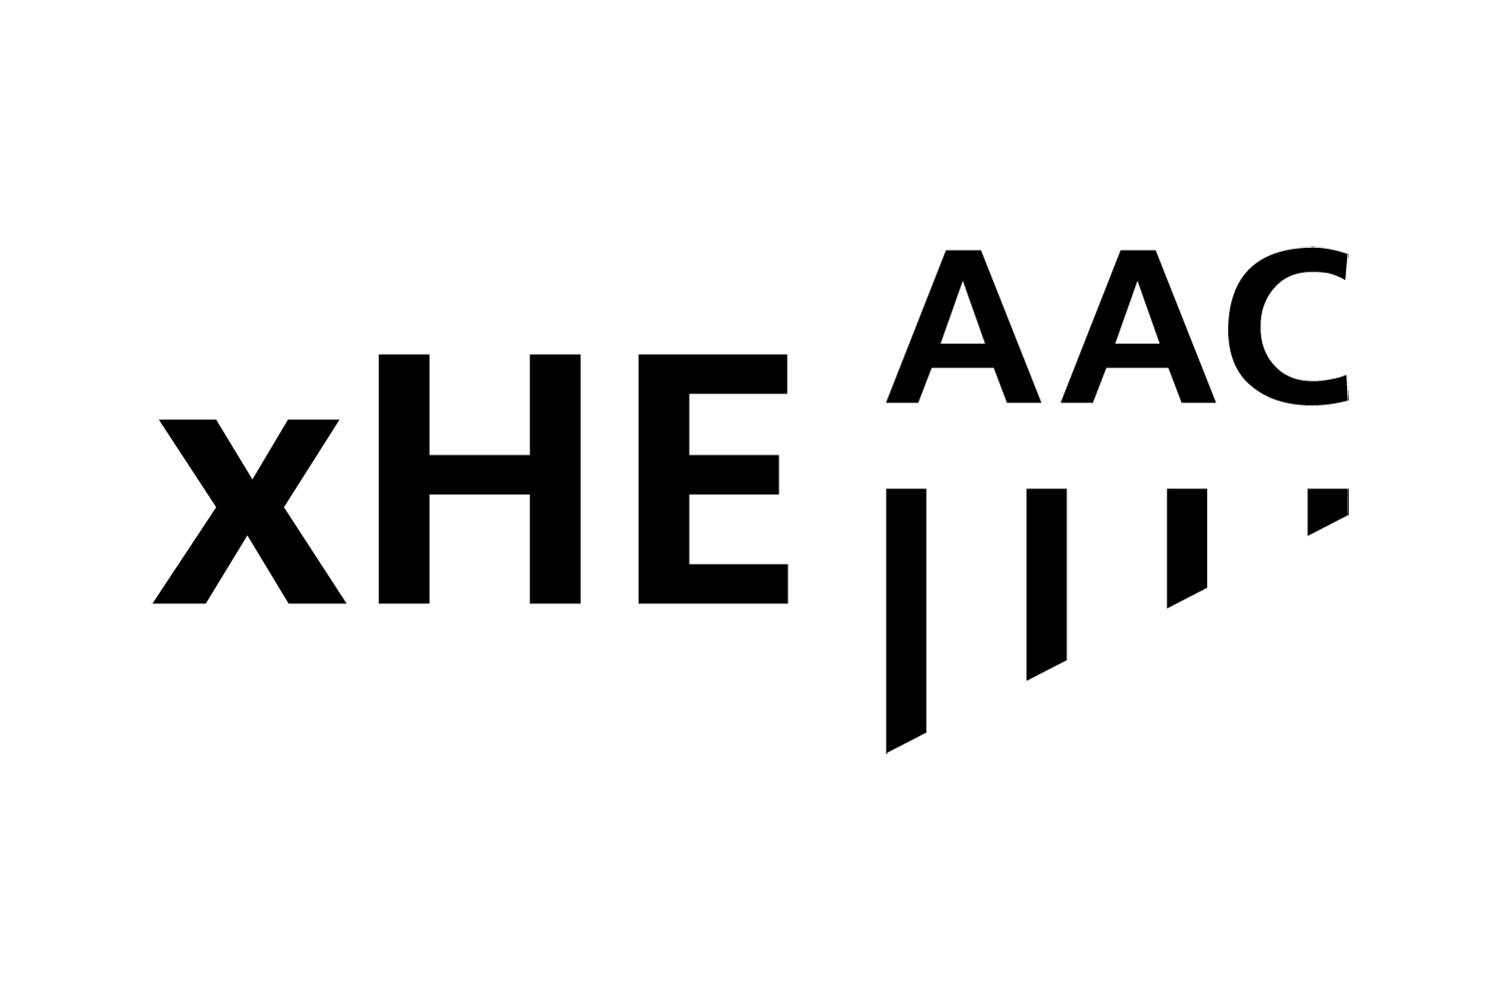 xHE-AAC logo